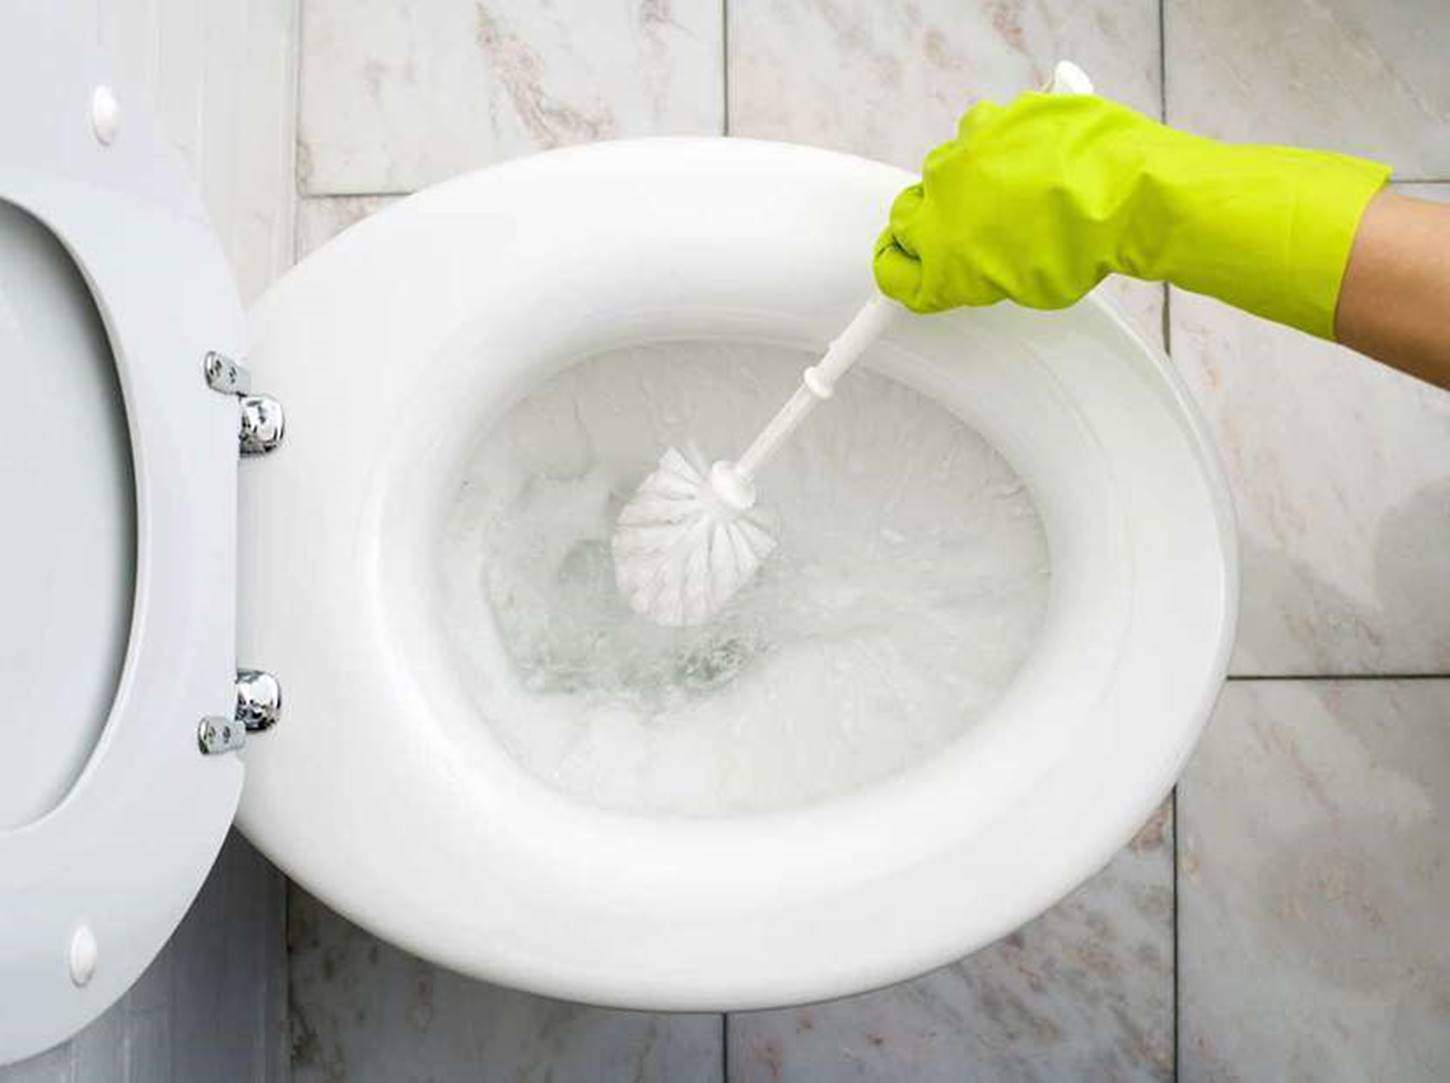 Vazo sanitário sendo limpado